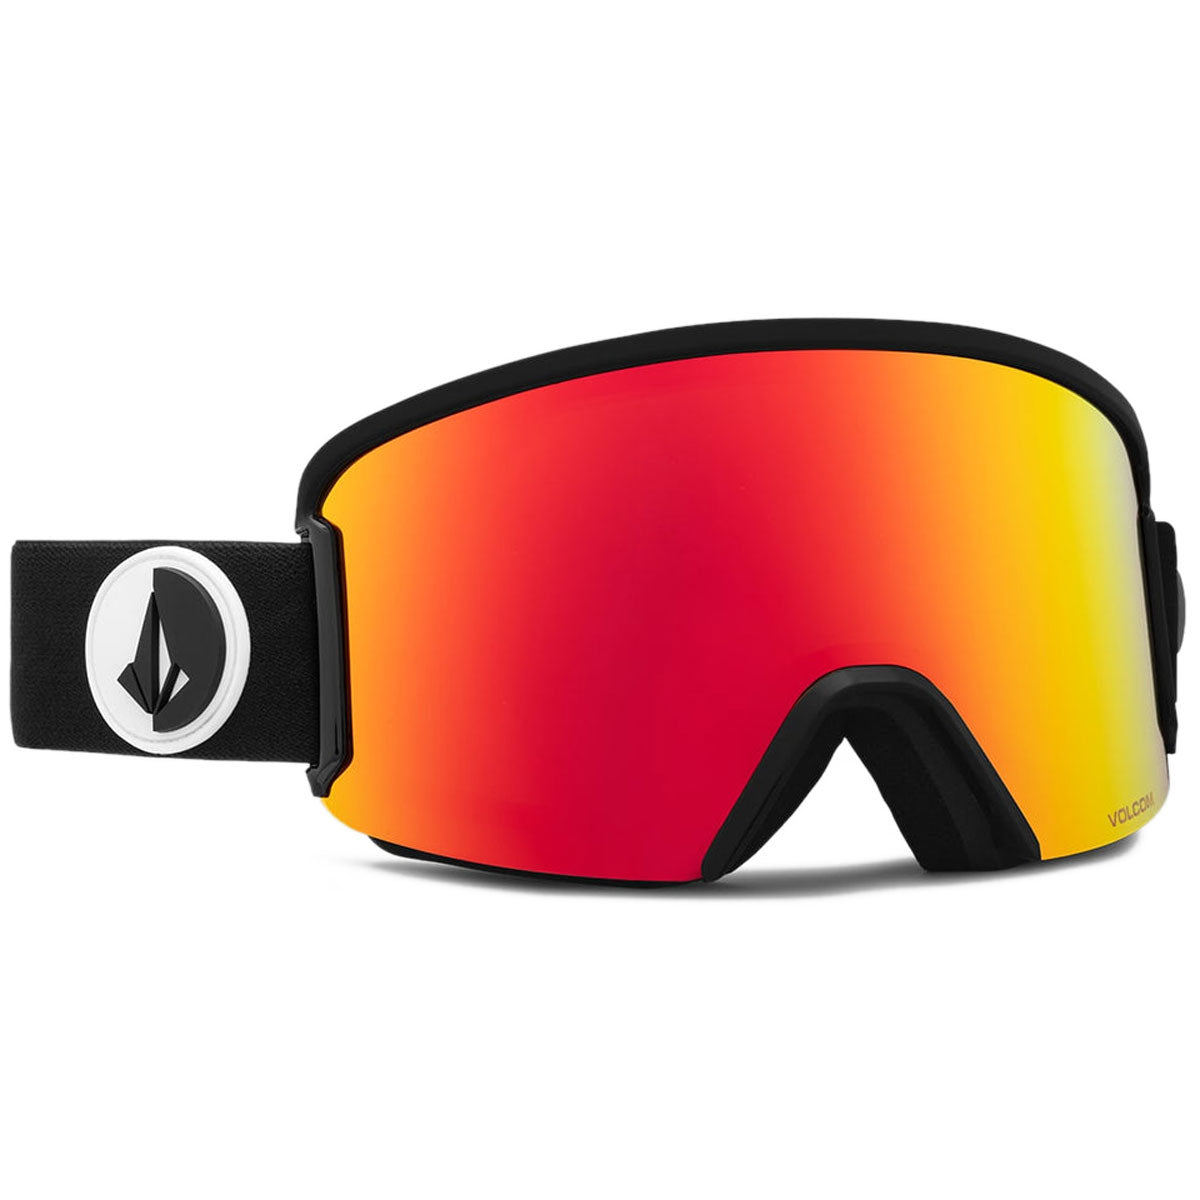 Volcom Garden Snowboard Goggles - Gloss Black/Red Chrome image 3